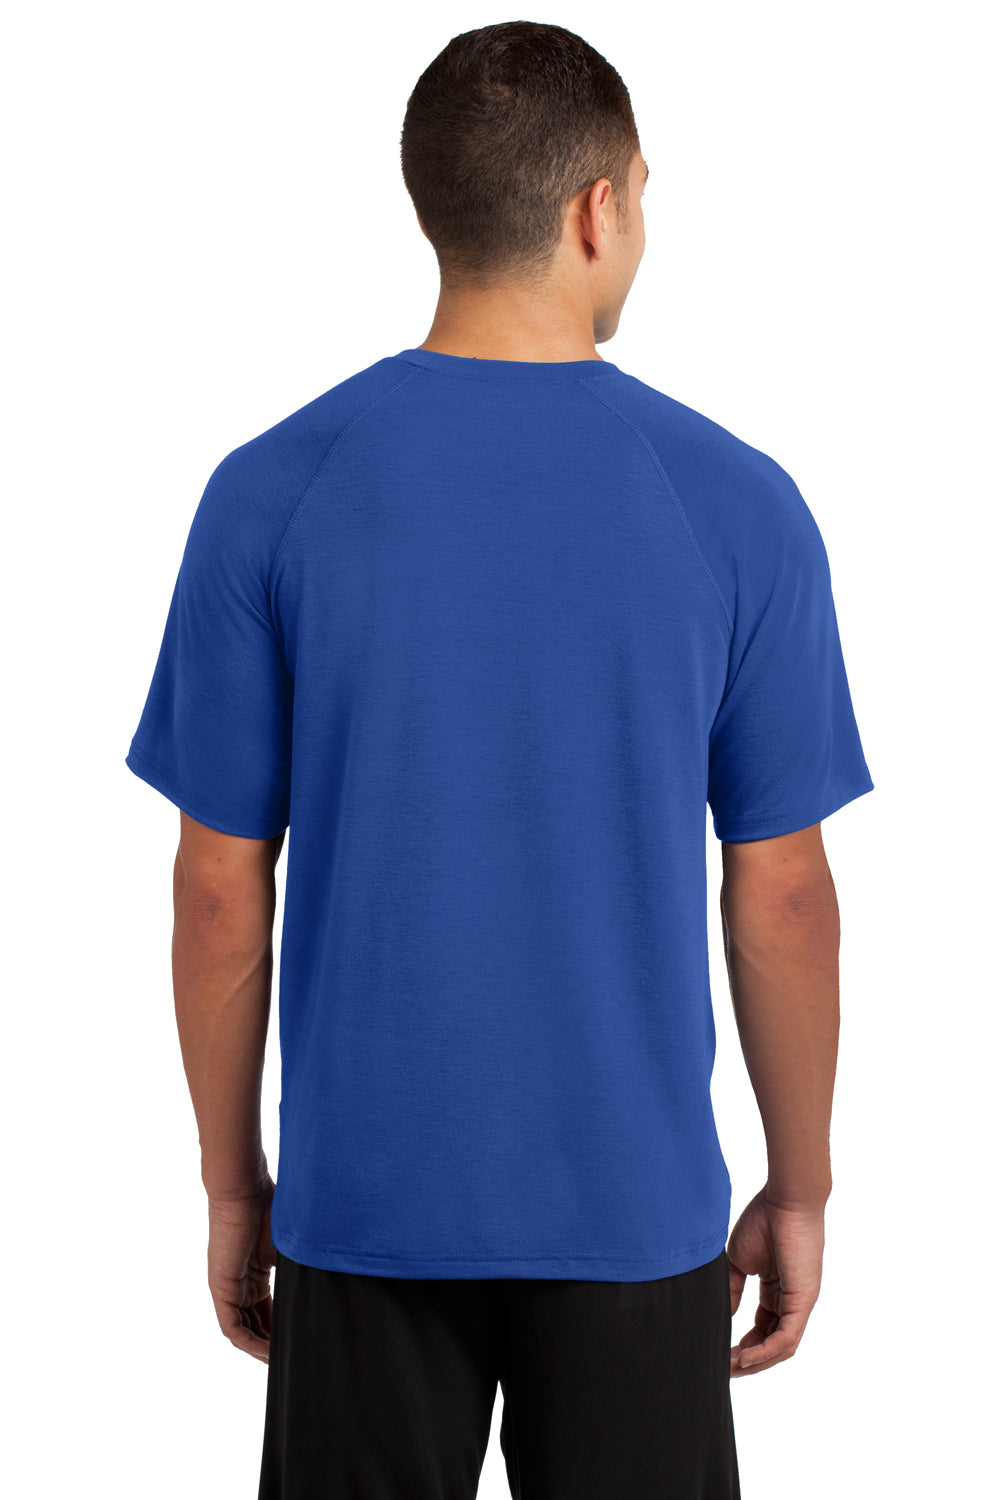 Sport-Tek ST700 Mens Ultimate Performance Moisture Wicking Short Sleeve Crewneck T-Shirt Royal Blue Back